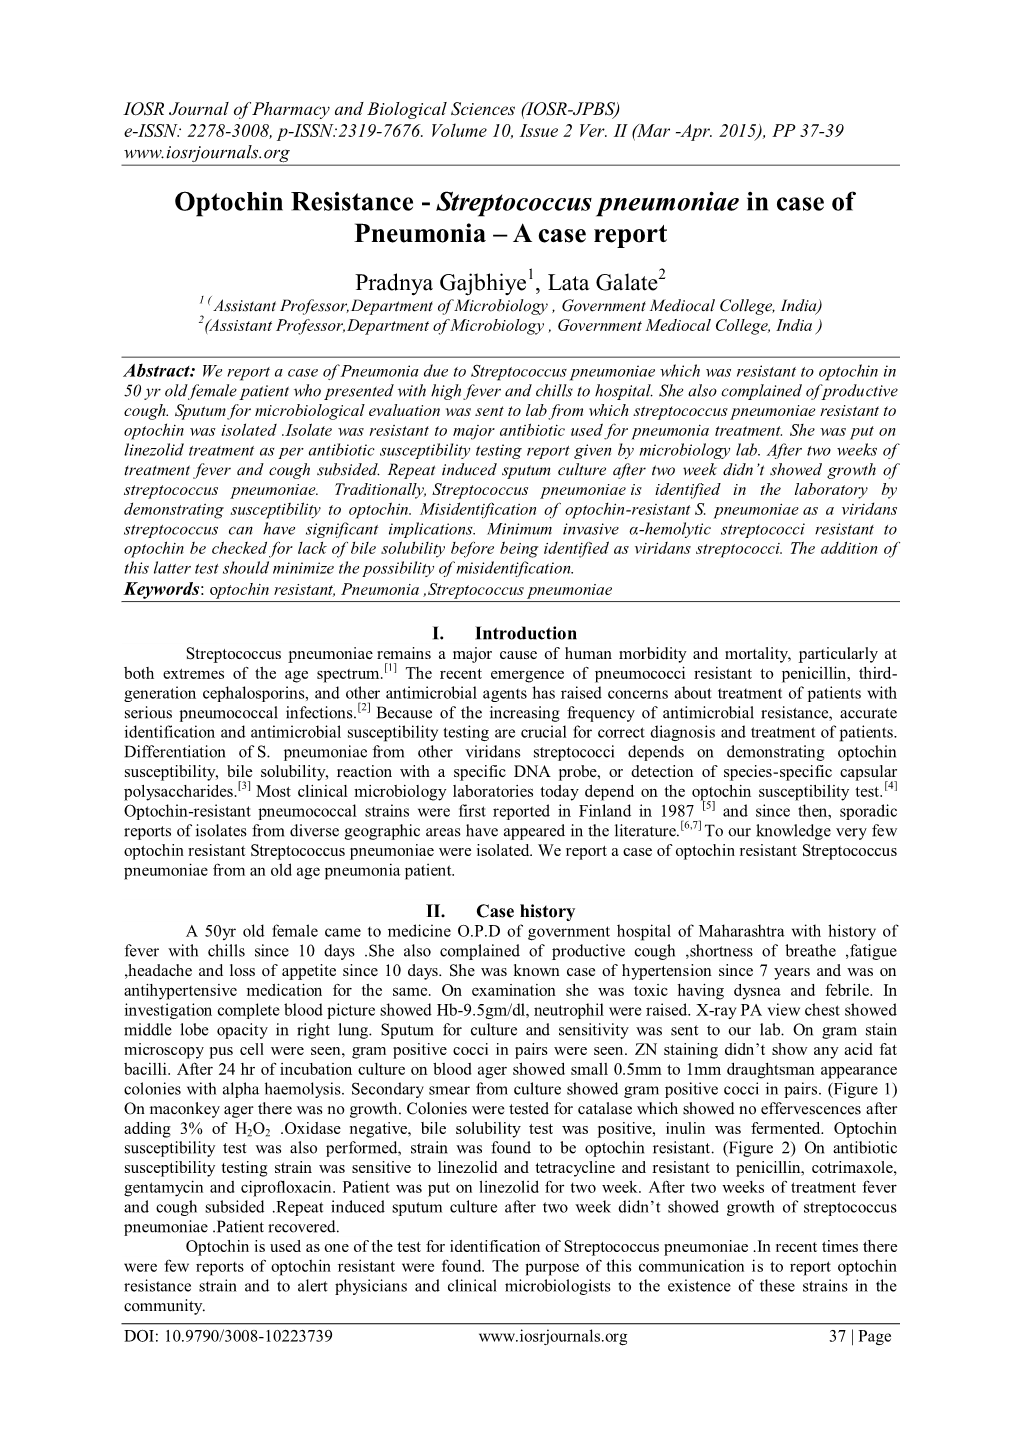 Optochin Resistance - Streptococcus Pneumoniae in Case of Pneumonia – a Case Report